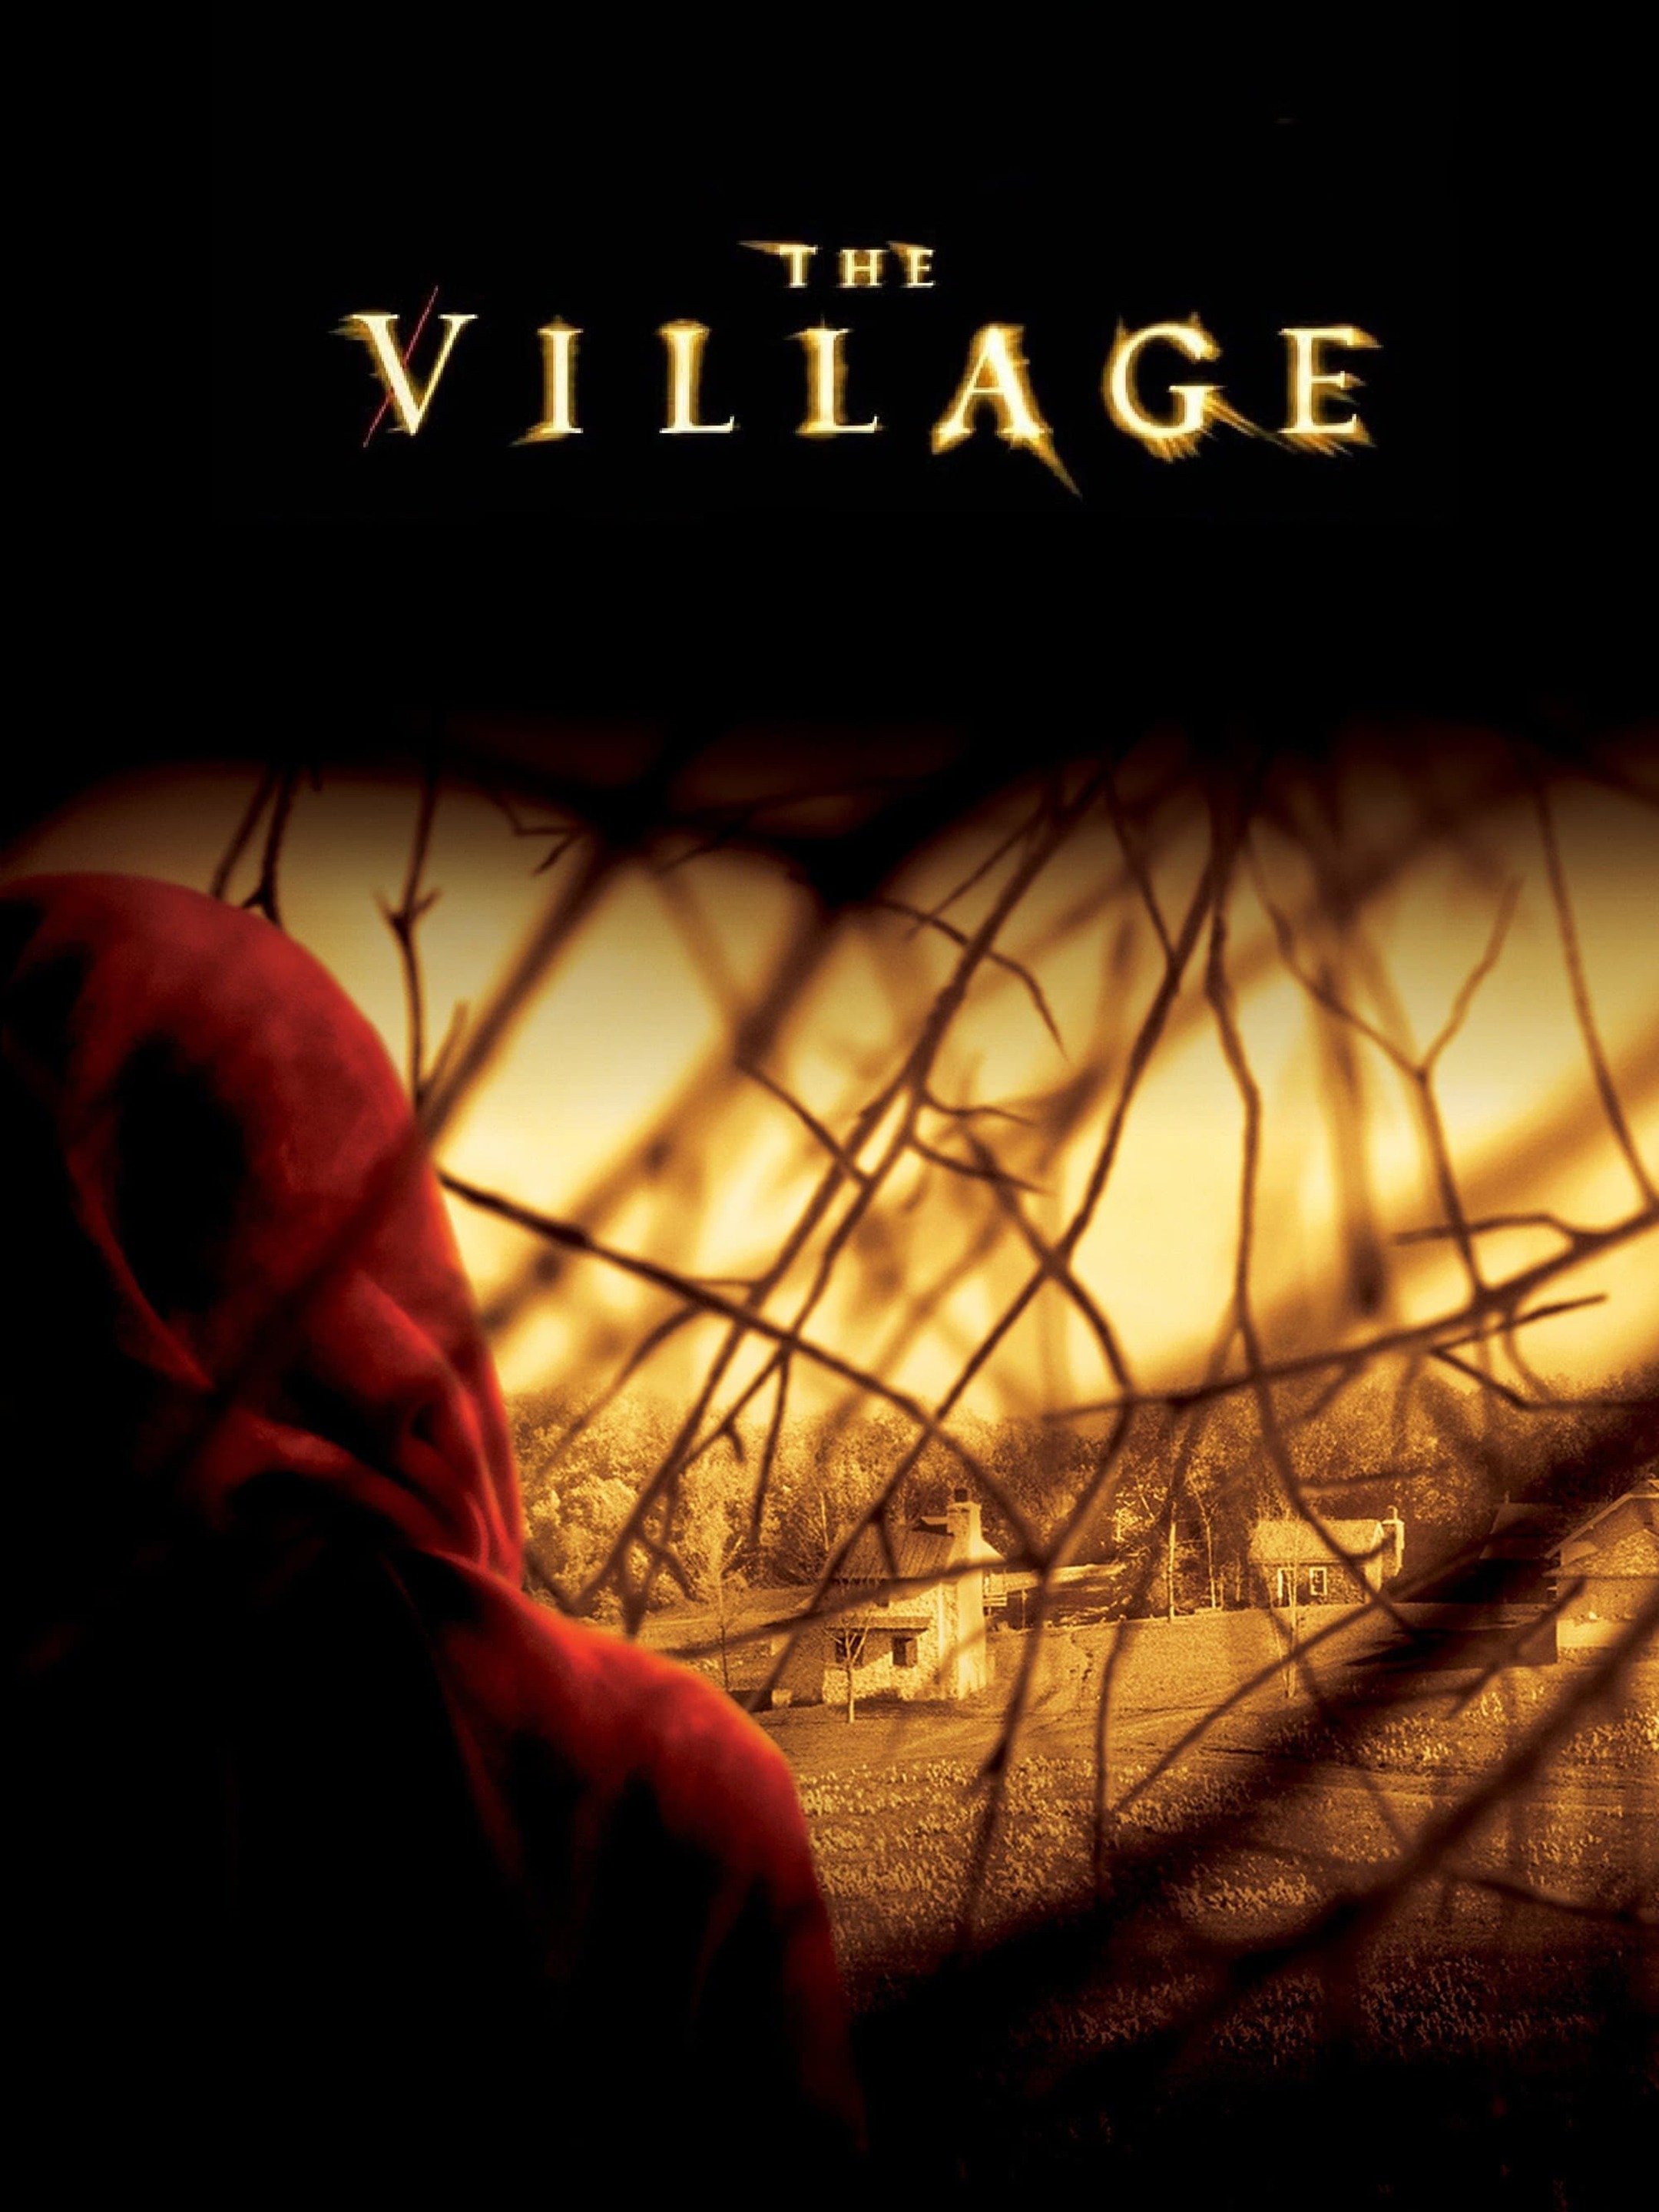 The Village Movie Reviews